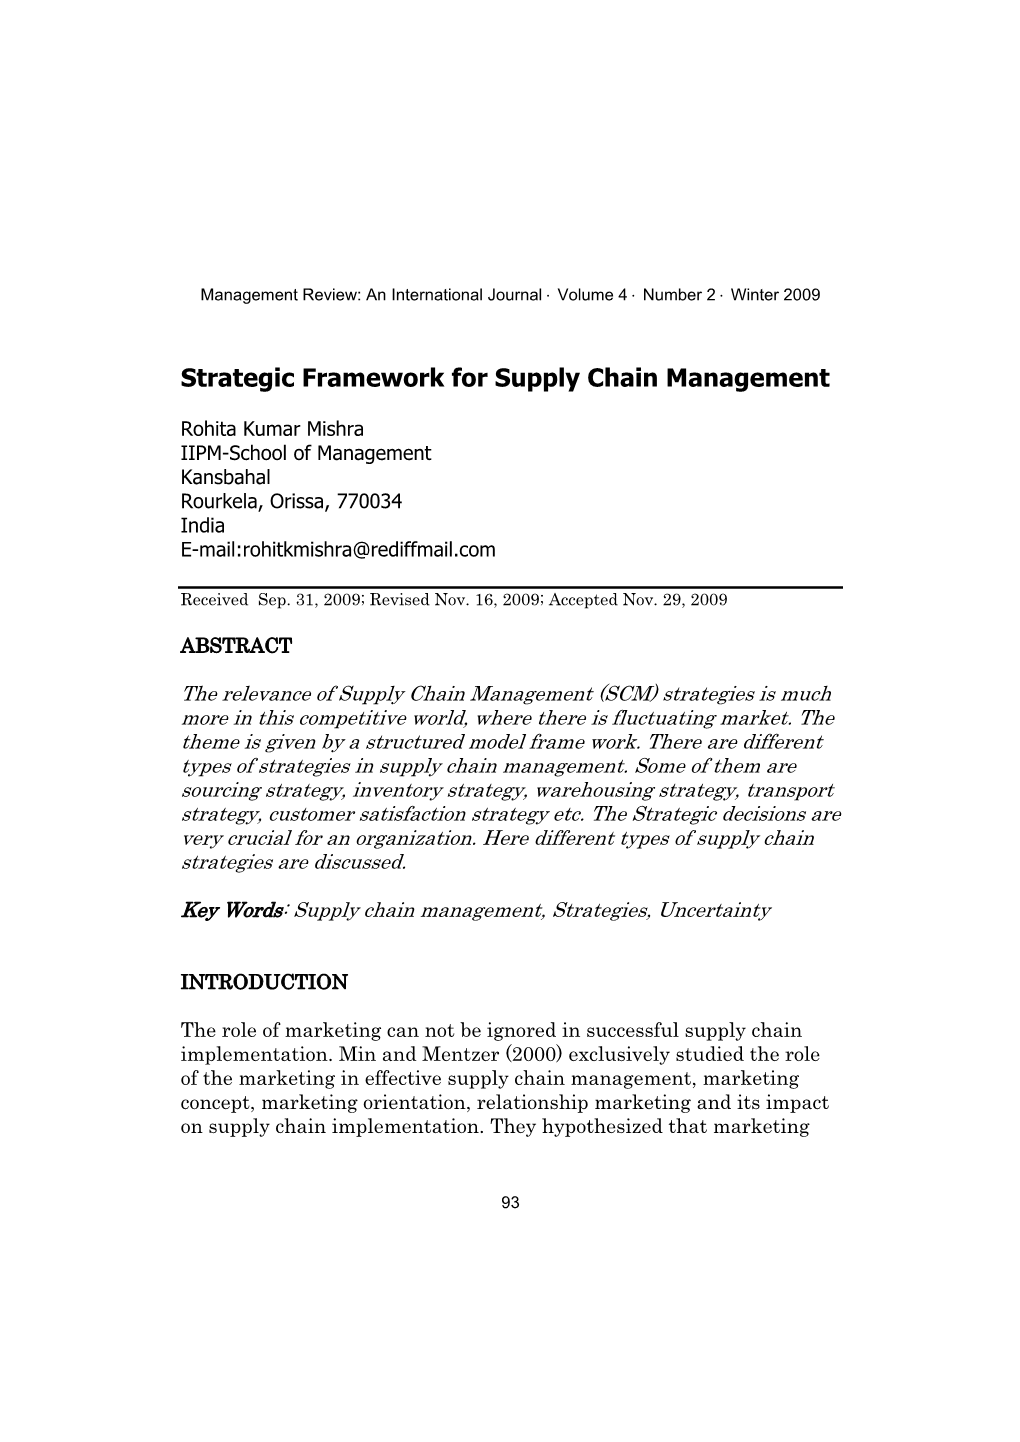 Strategic Framework for Supply Chain Management